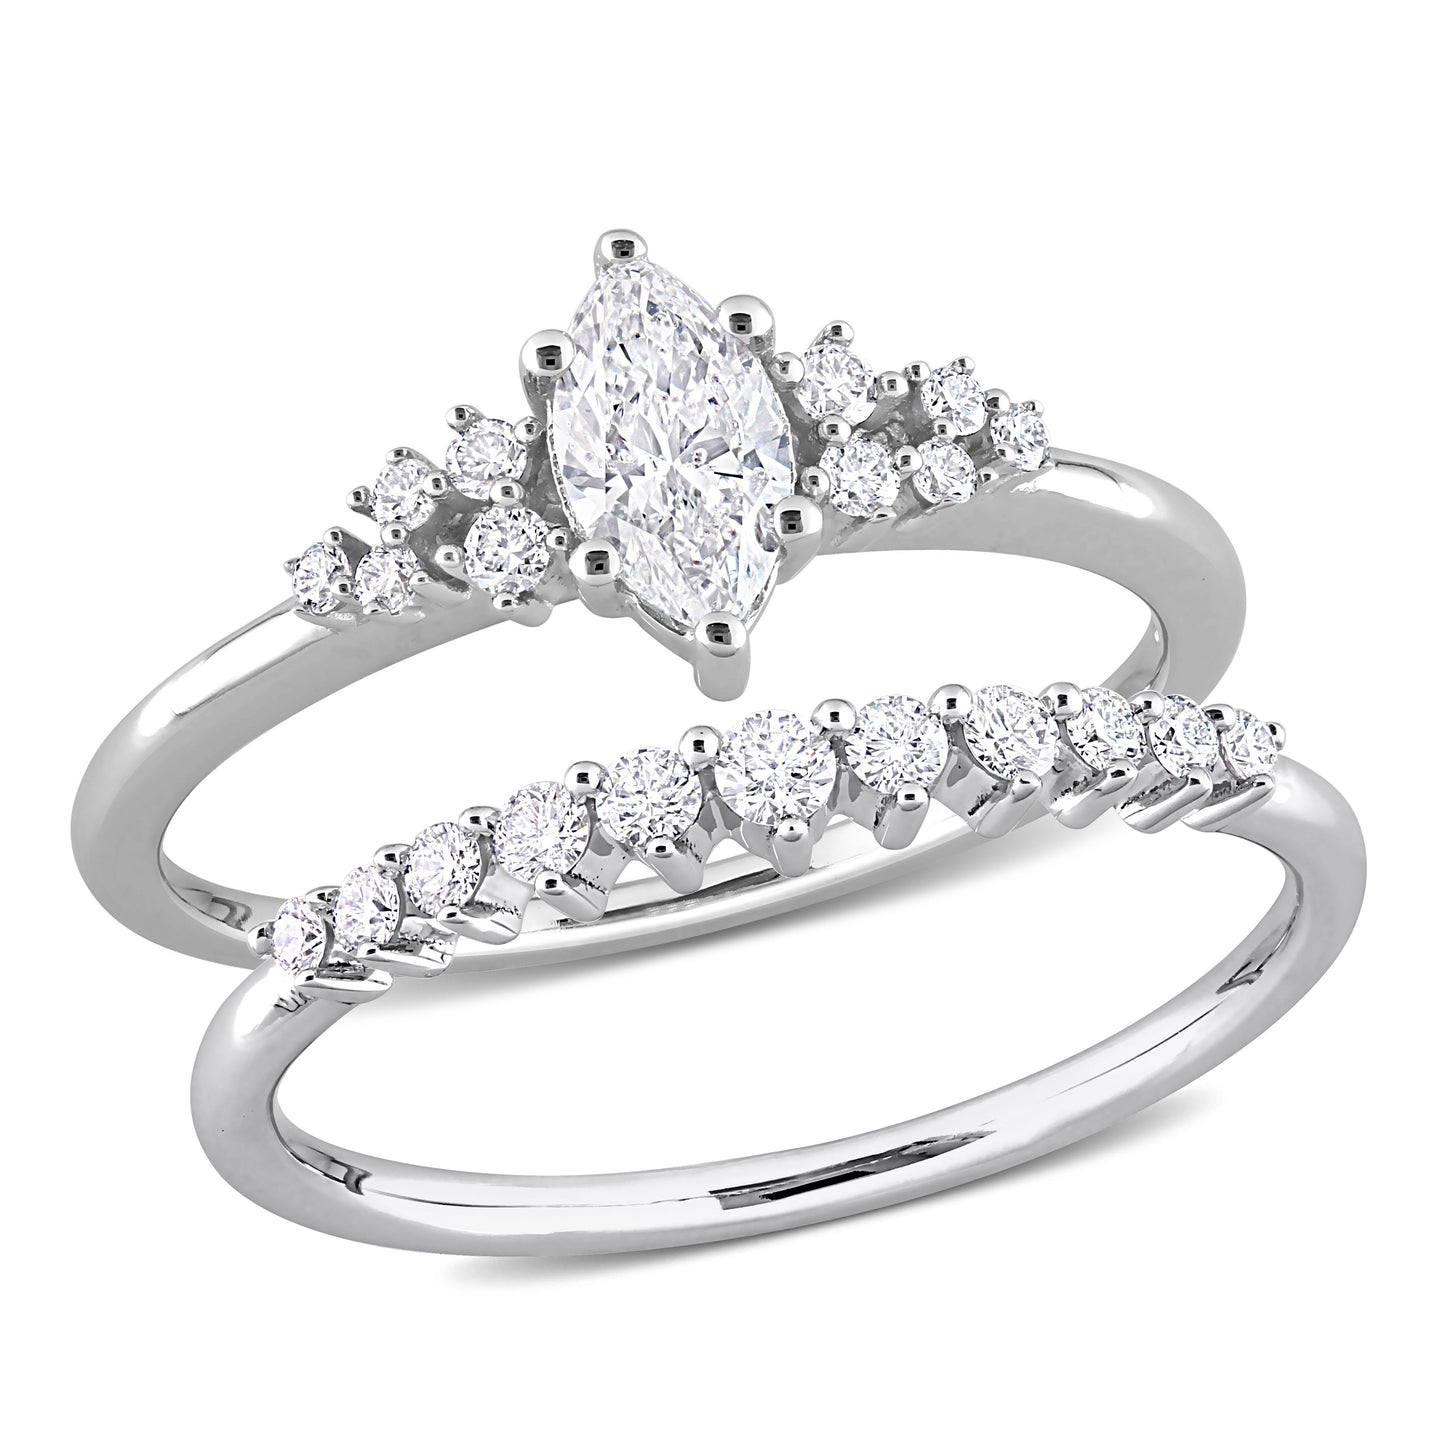 Marquise & Round Diamond Ring Set in 14k White Gold